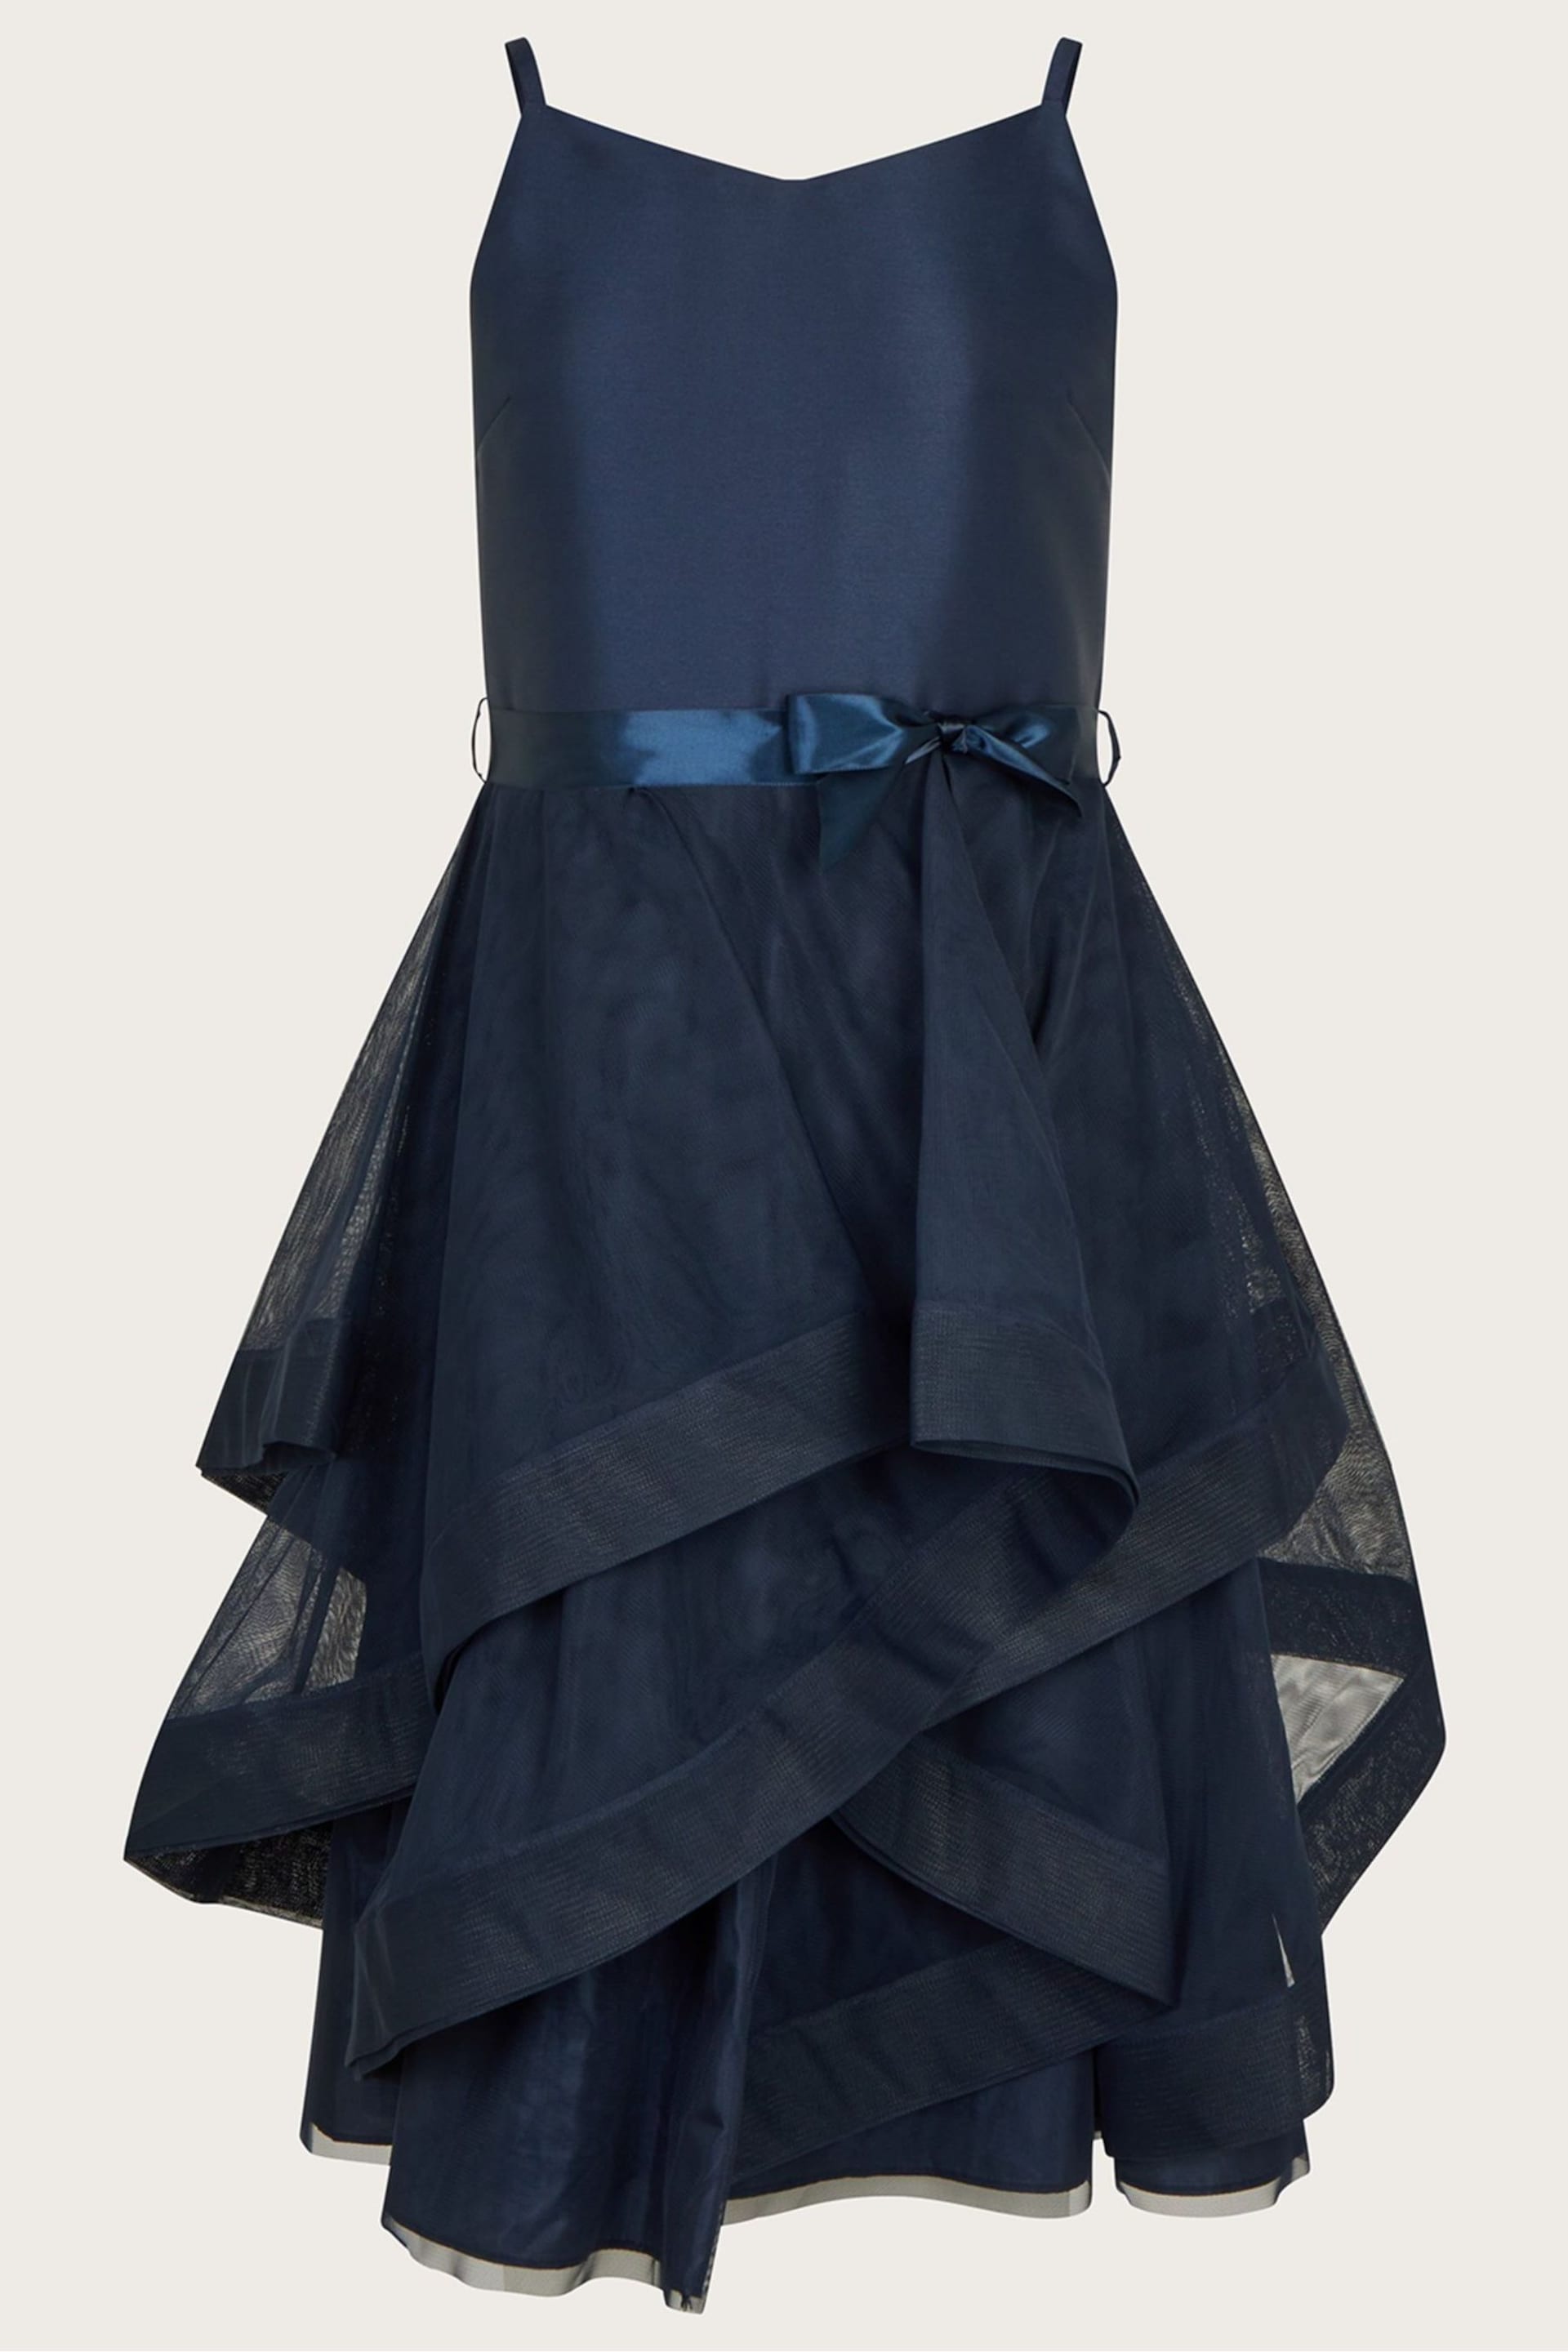 Monsoon Blue Sienna Ruffle Prom Dress - Image 1 of 3